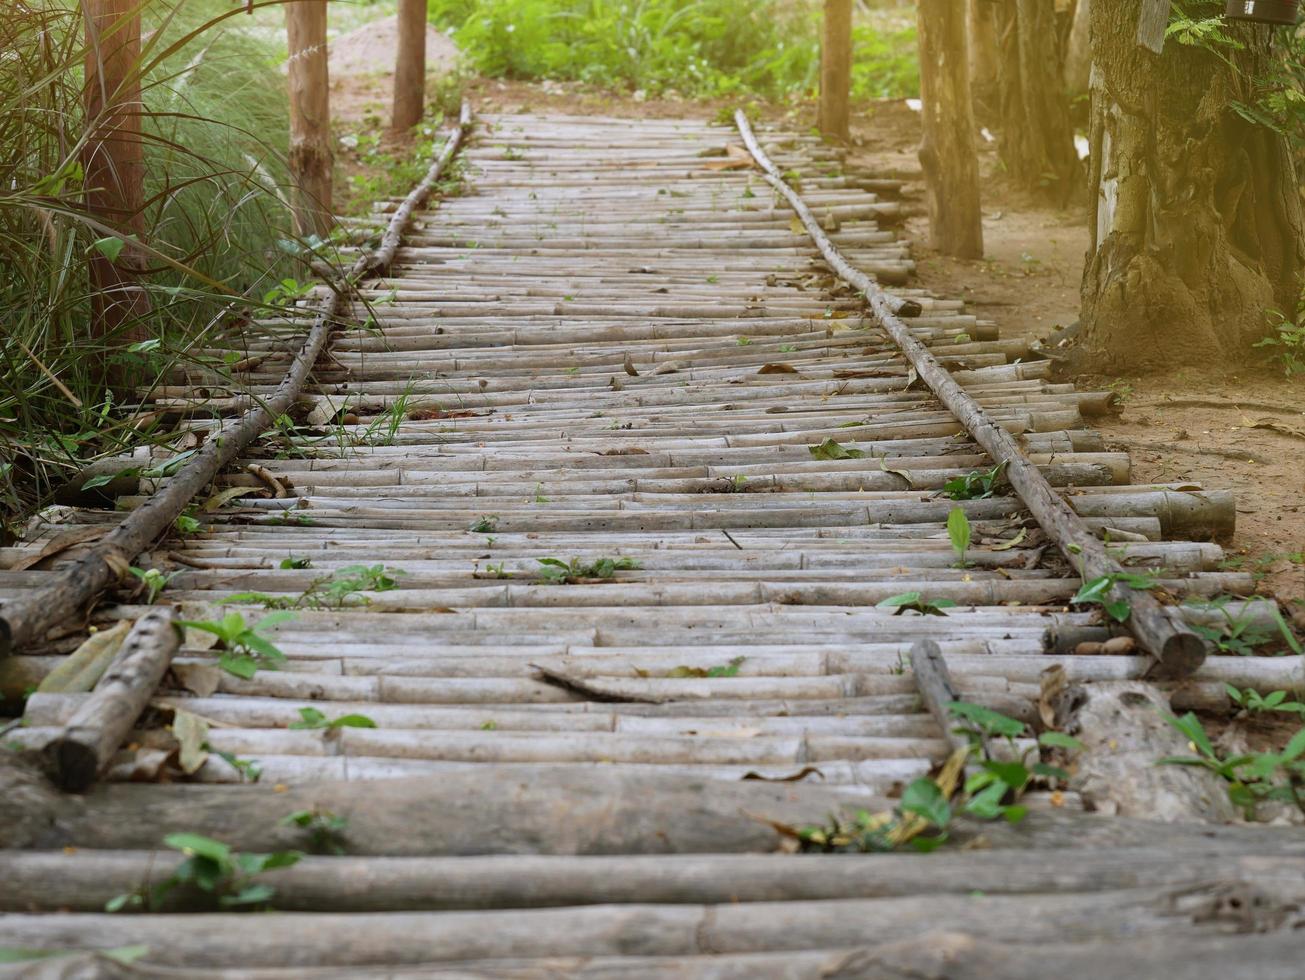 la pasarela peatonal está hecha de troncos de bambú alineados. foto